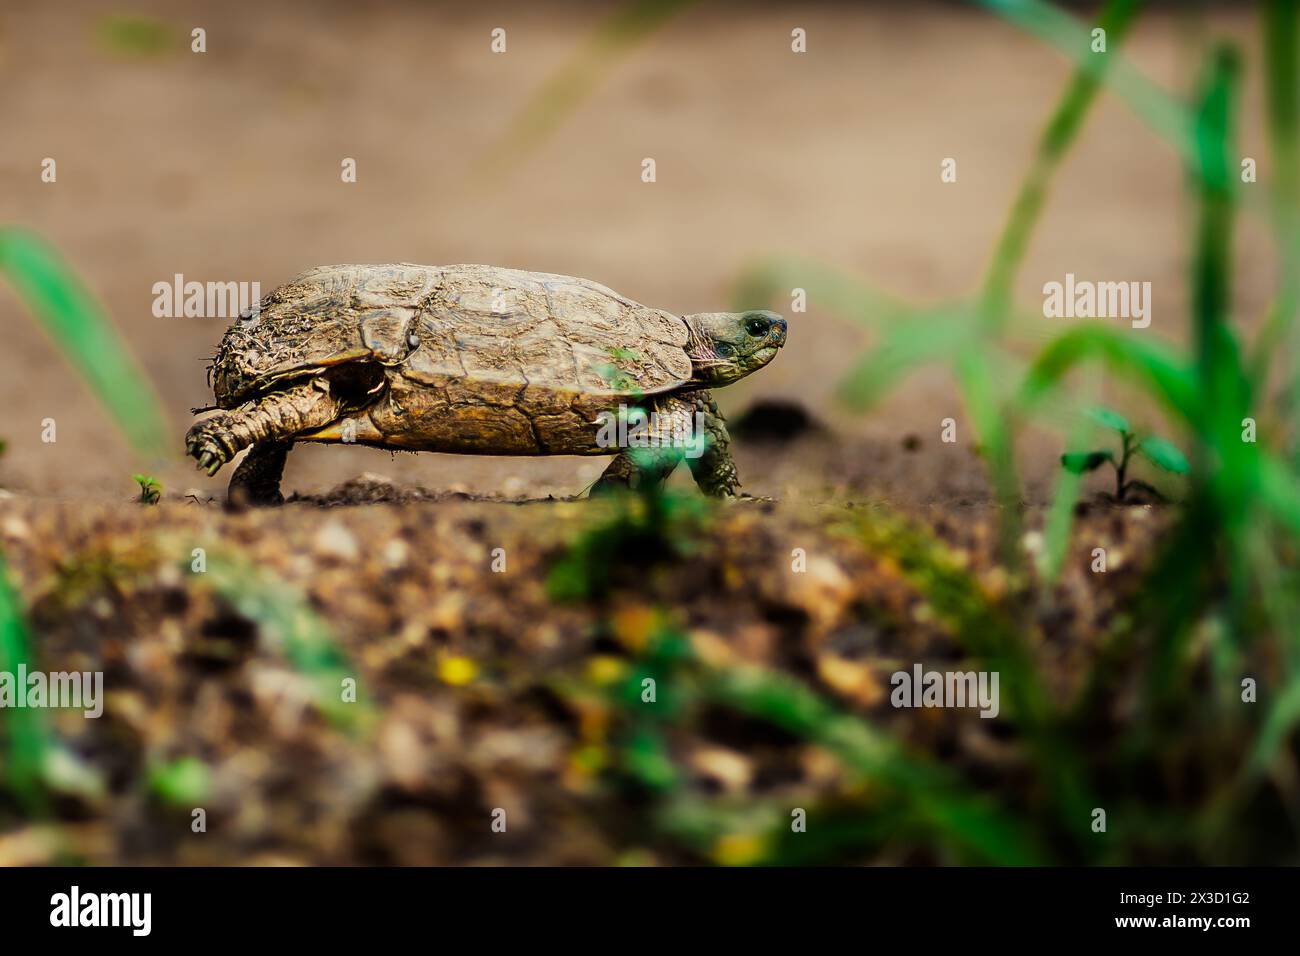 Solitary tortoise wanders arid habitat, embodiment of endurance Stock Photo